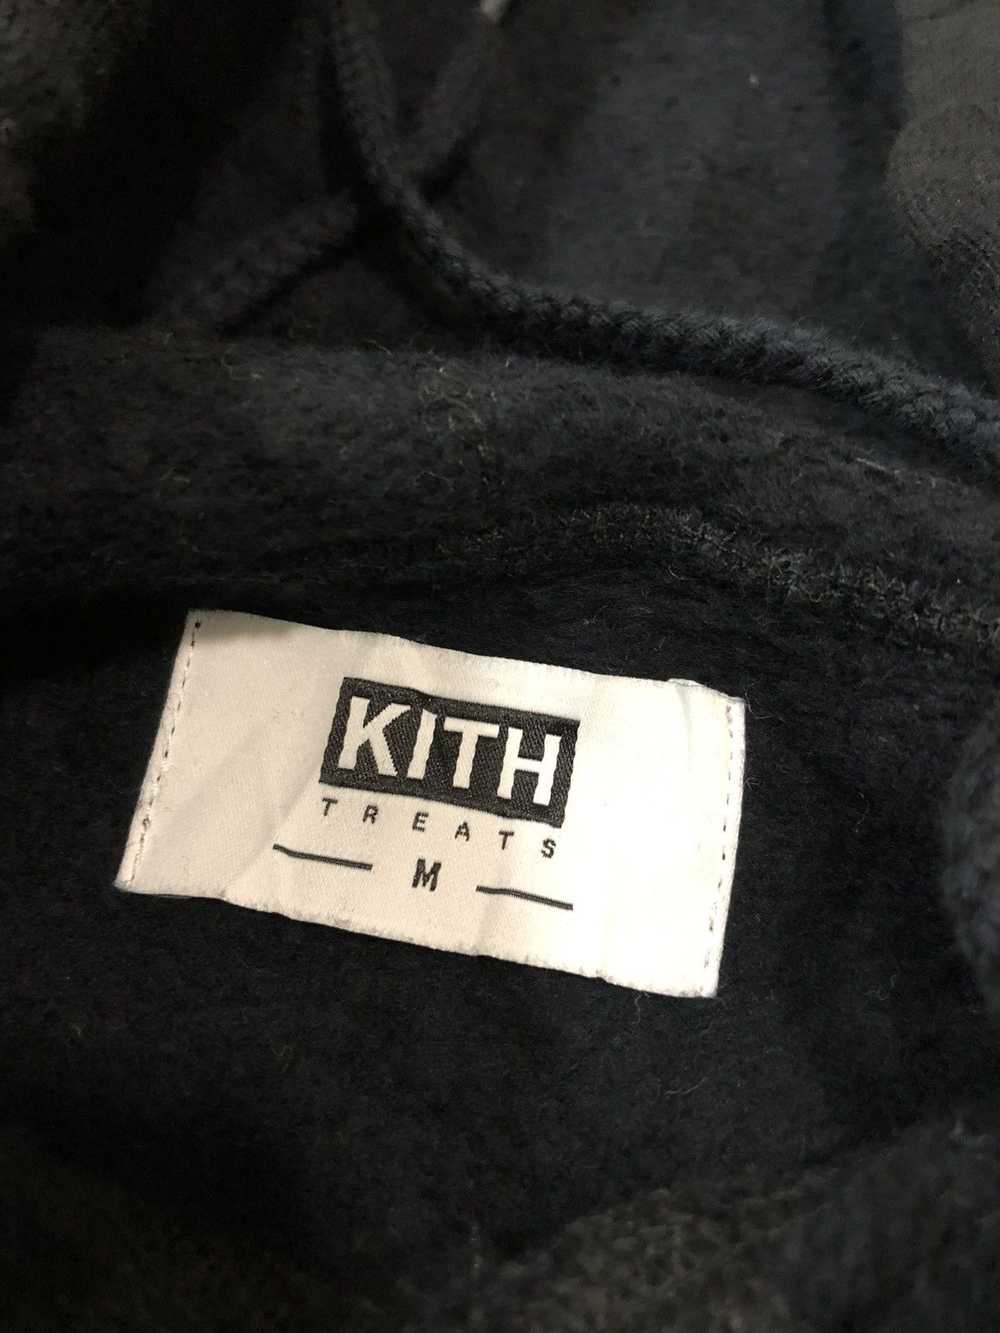 Kith Kith treats hoodie - image 6